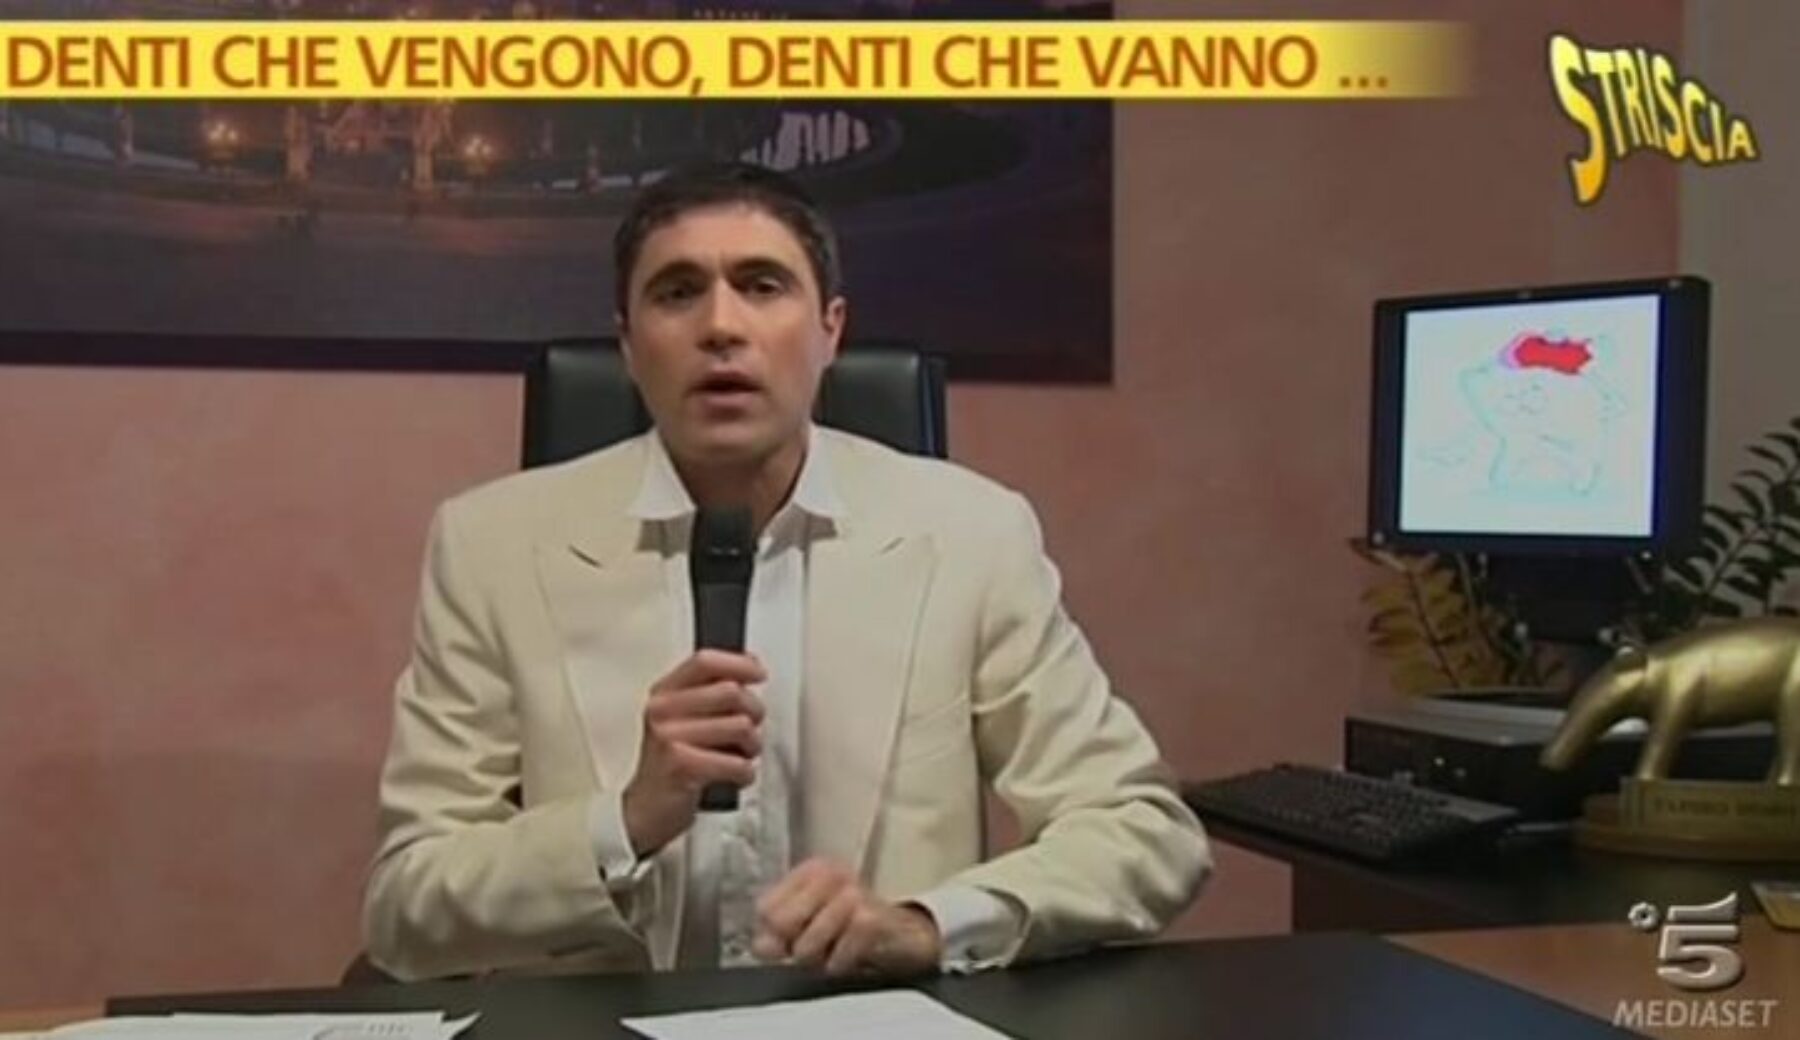 Striscia la notizia, condannato il primario Gian Antonio Favero